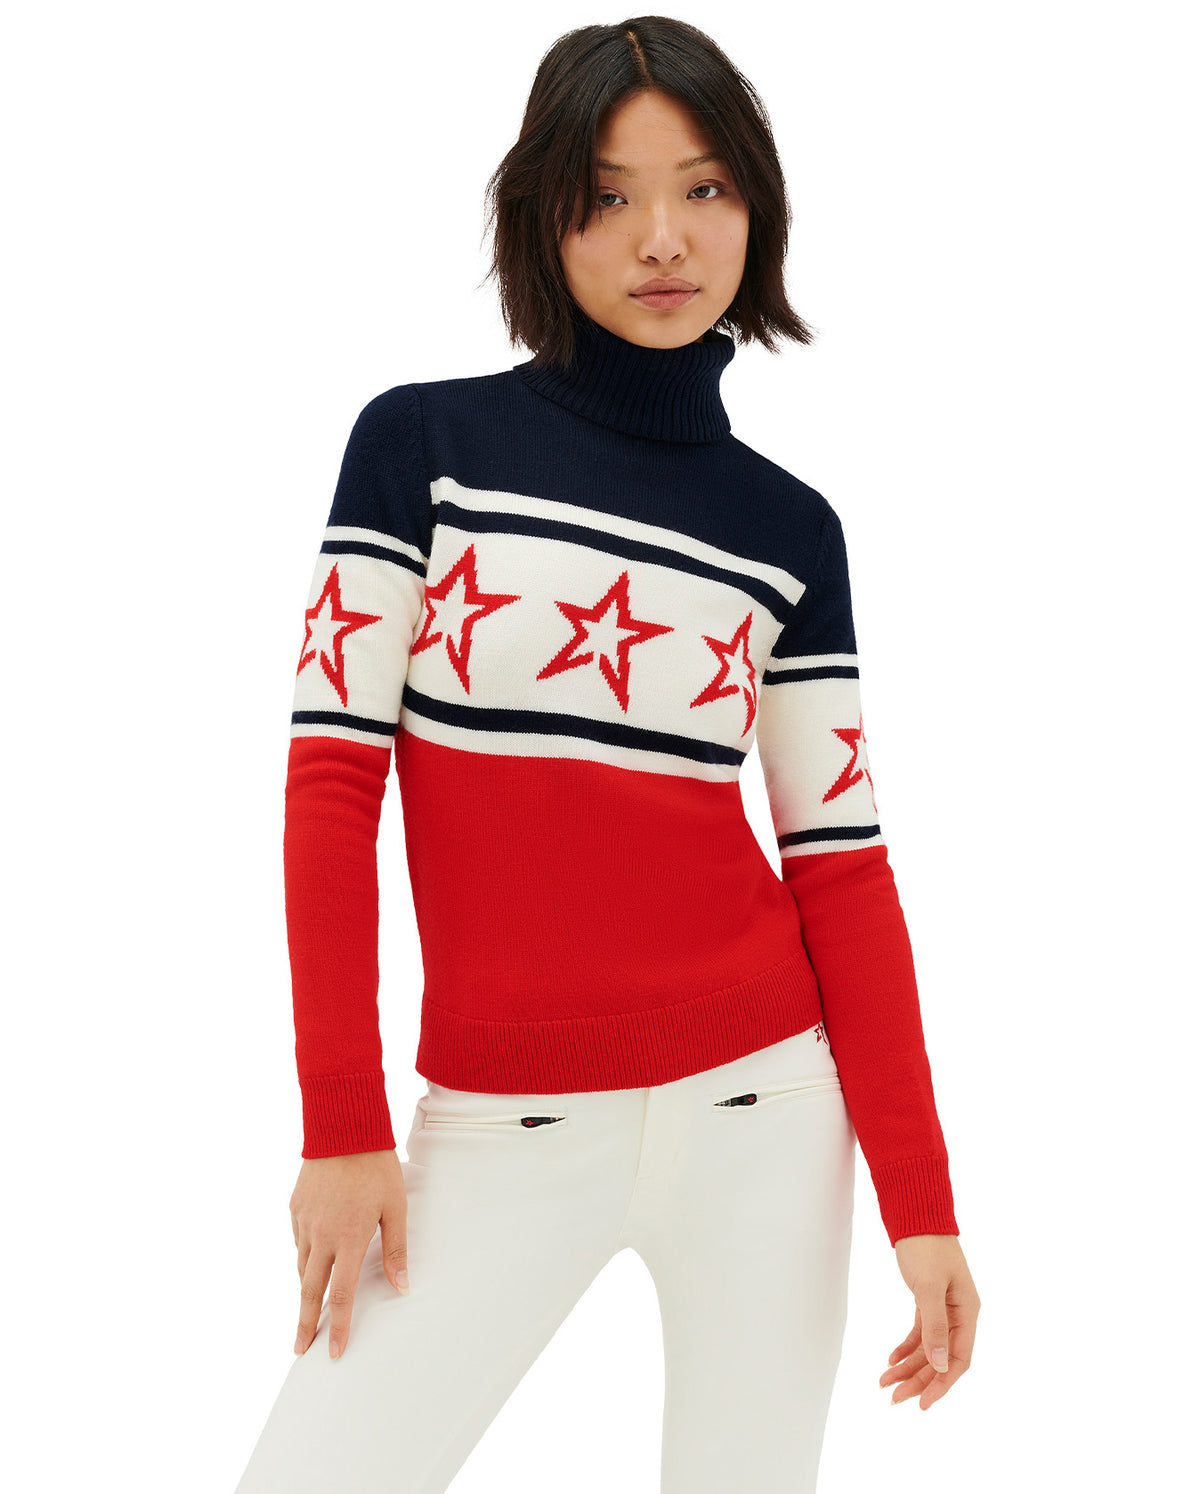 Chopper Sweater Ii - Red/Navy